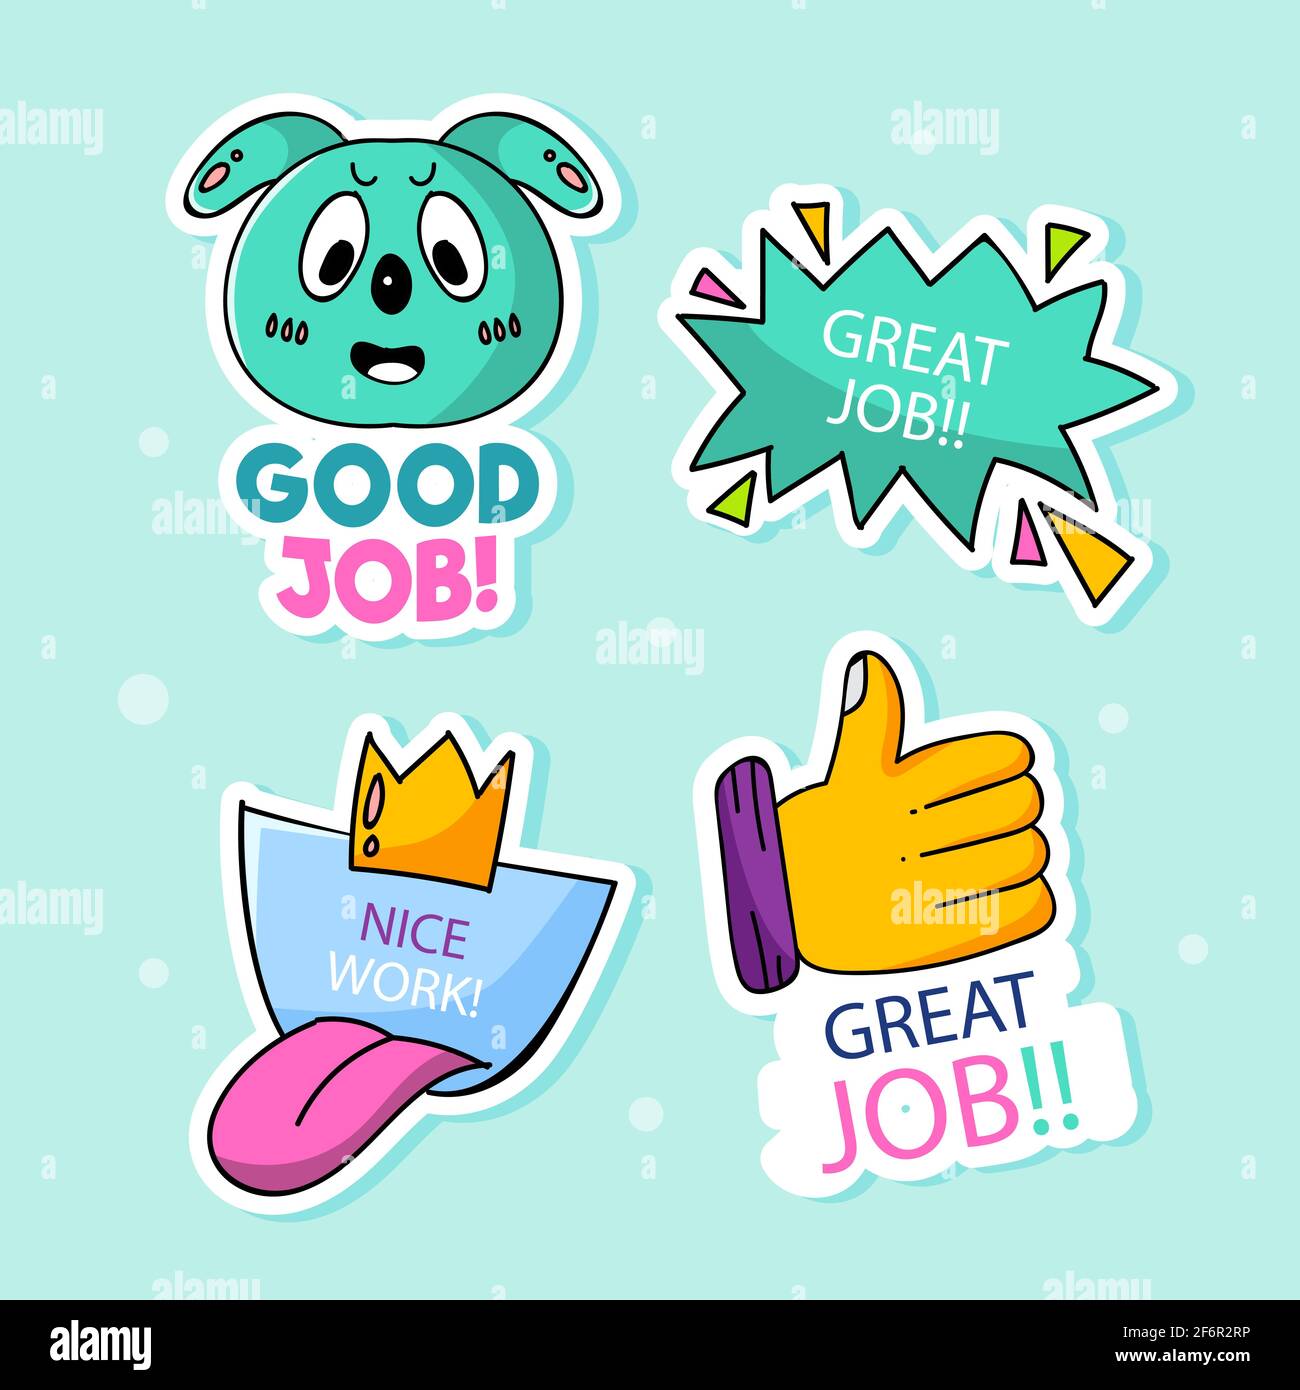 https://c8.alamy.com/comp/2F6R2RP/set-of-good-job-and-great-job-stickers-vector-illustration-2F6R2RP.jpg